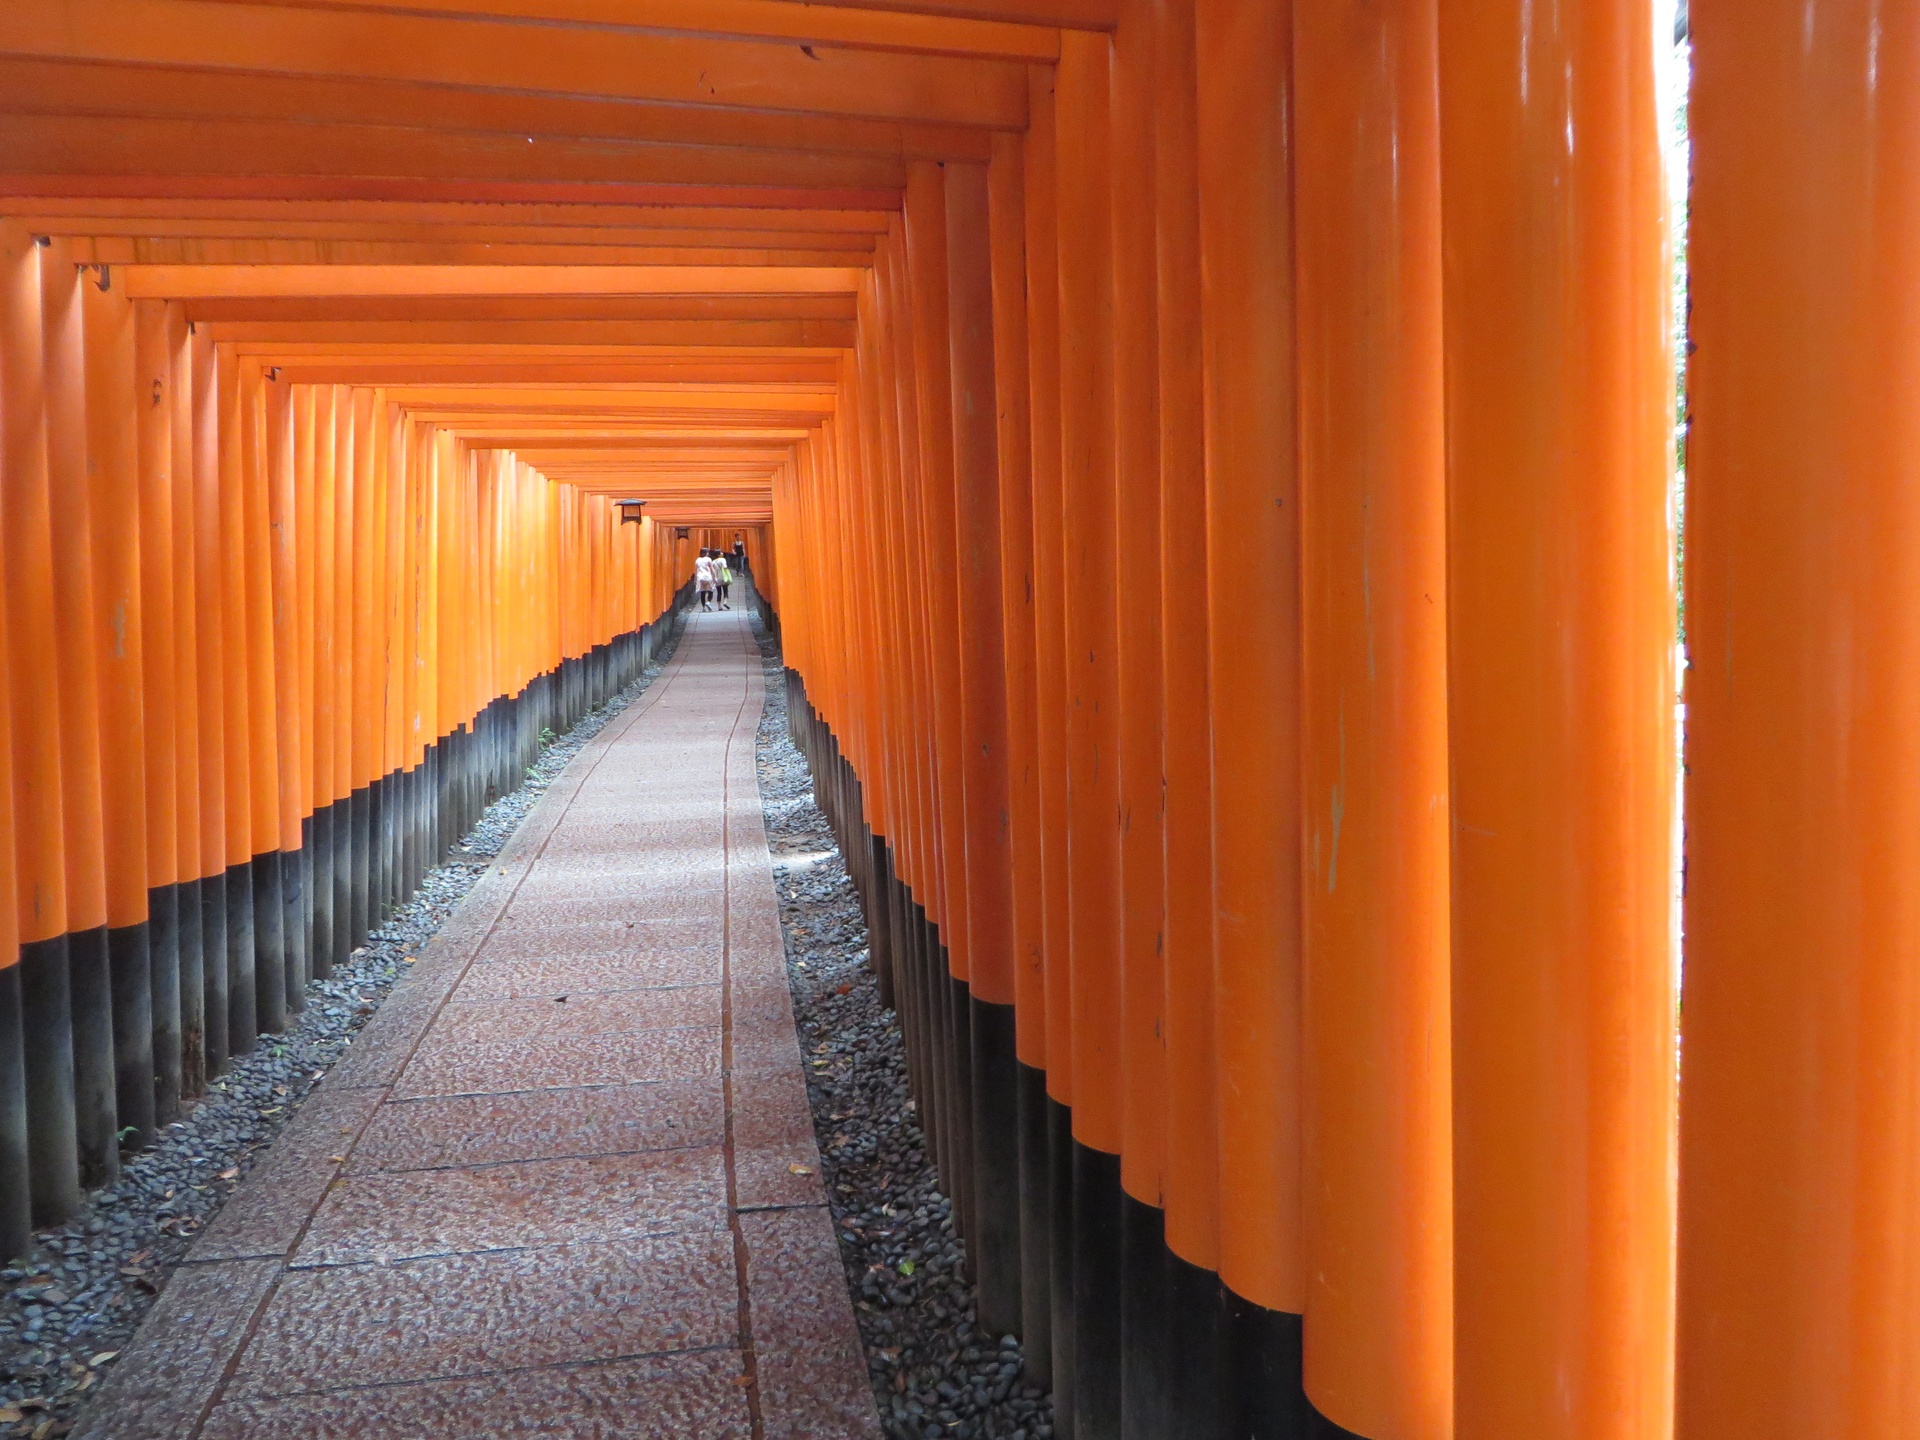 View of walkway with orange pillars lining sidewalk at the Fushimi Inari-taisha Shrine